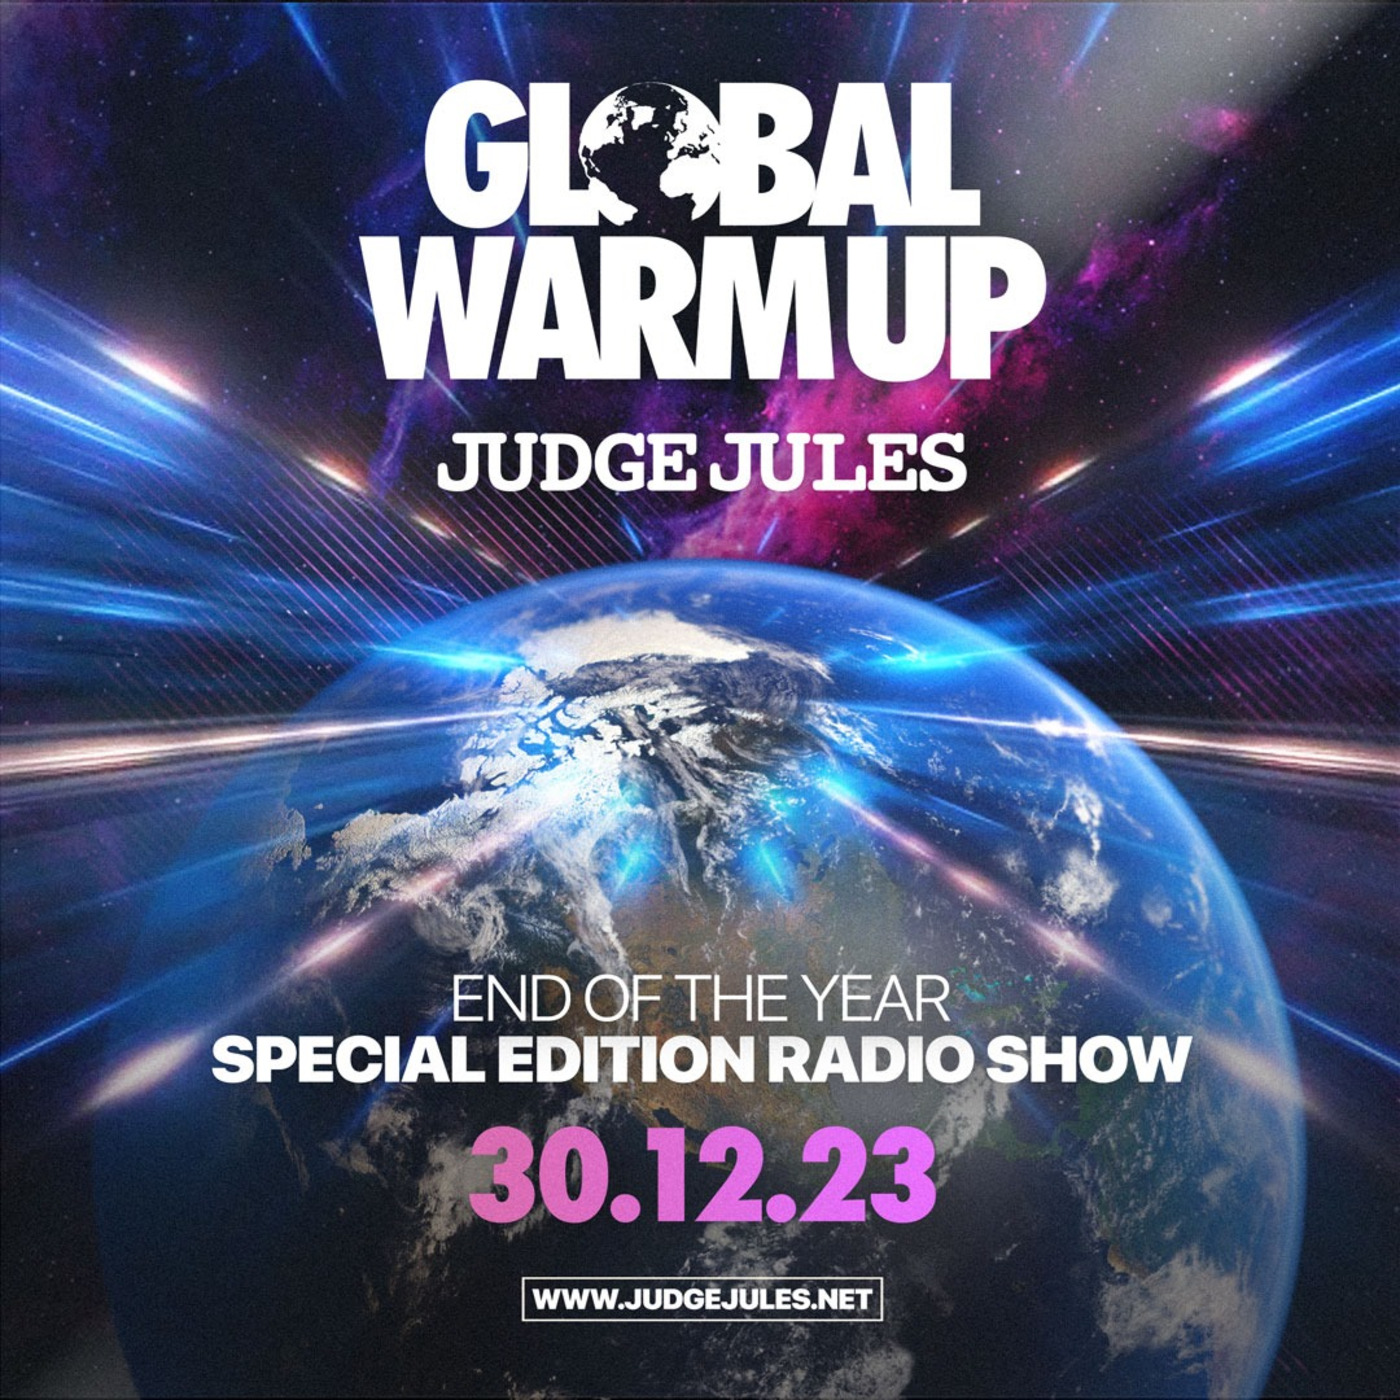 Episode 1034: JUDGE JULES PRESENTS THE GLOBAL WARM UP EPISODE 1034